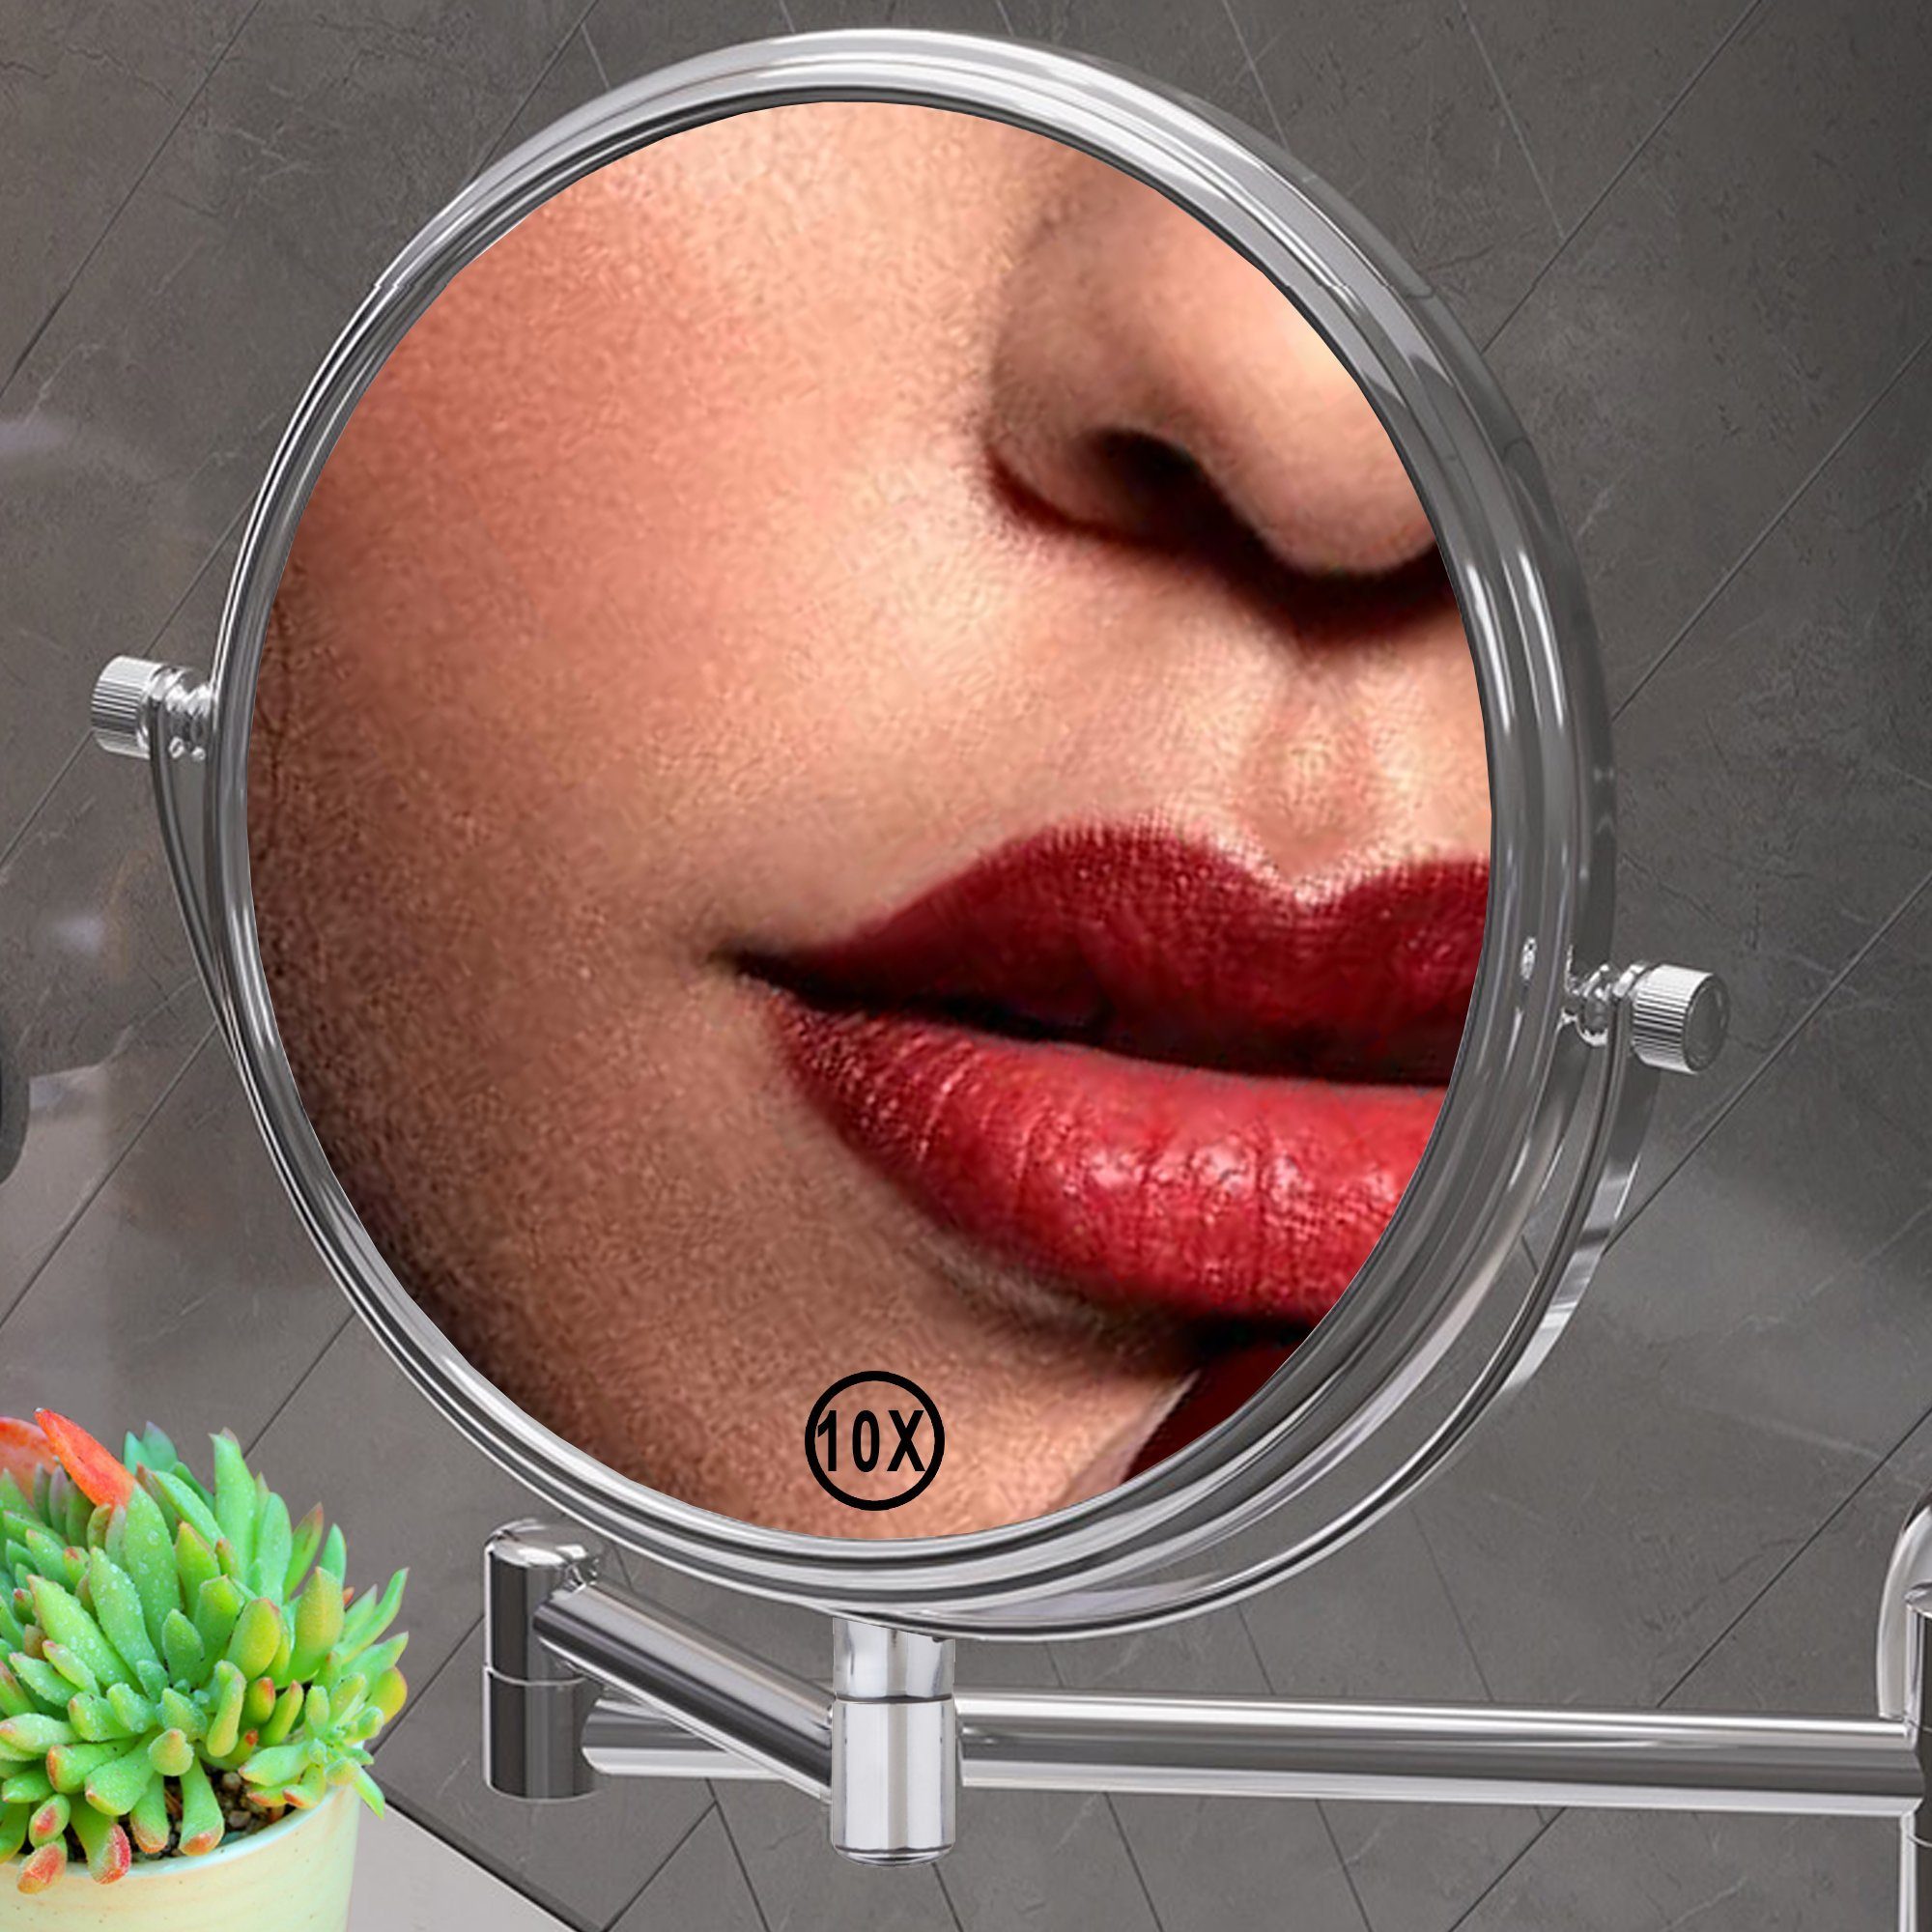 Melko Kosmetikspiegel Schminkspiegel Kosmetikspiegel Wandspiegel Vergrößerung (Stück), 10-fach 10-facher